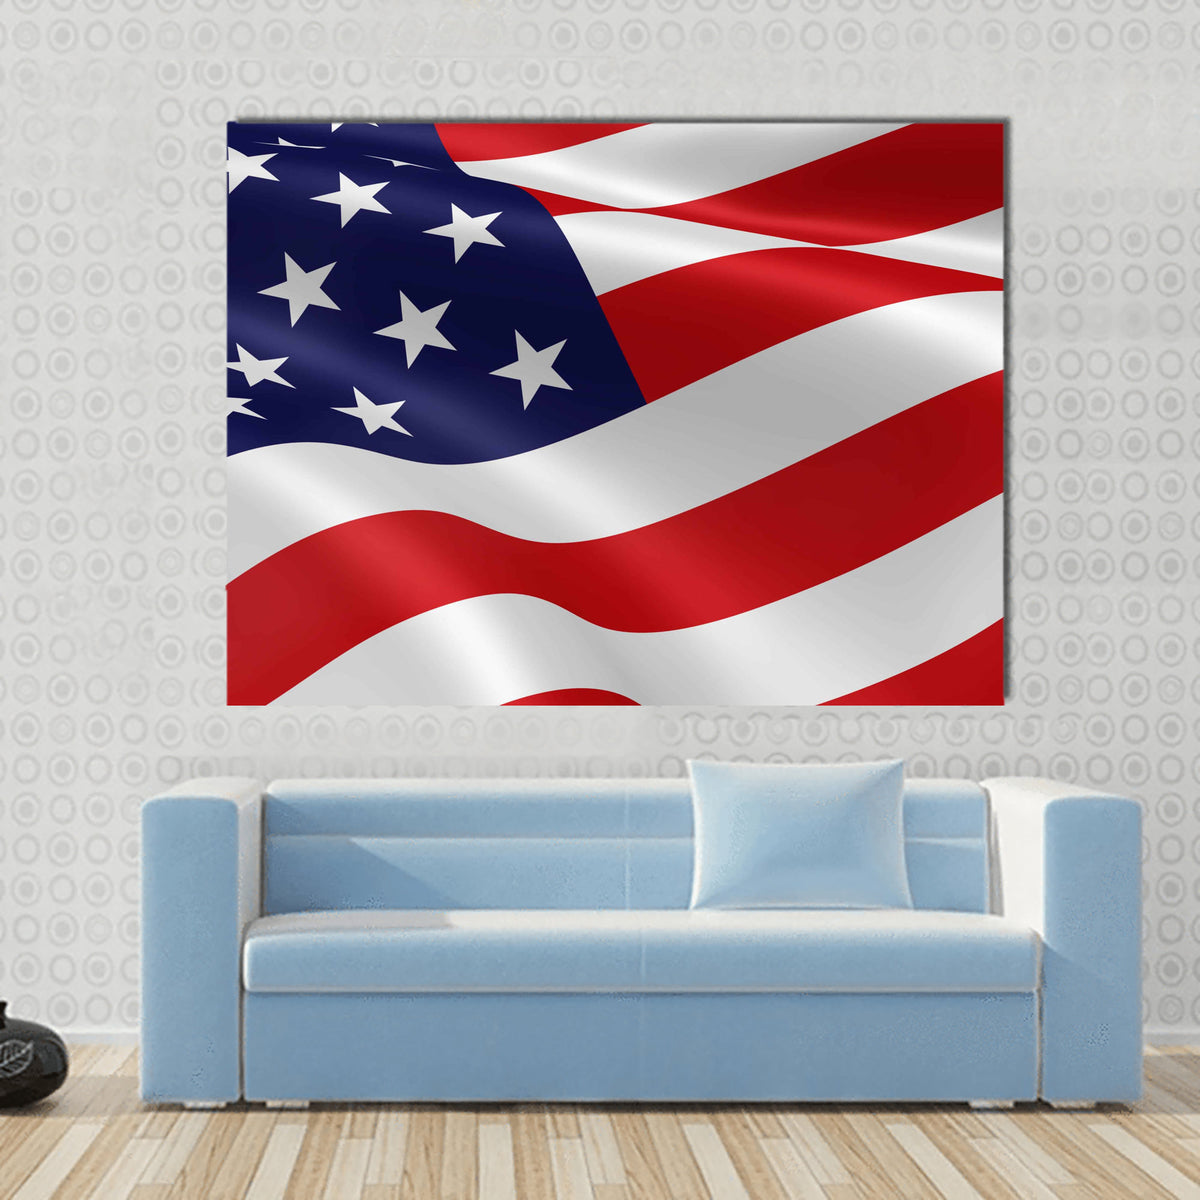 Wa American Piece Wall Panel Multi – Canvas Flag 2, USA 3, 4 Online Canvas Art & 1, Buy 5 Patriotic